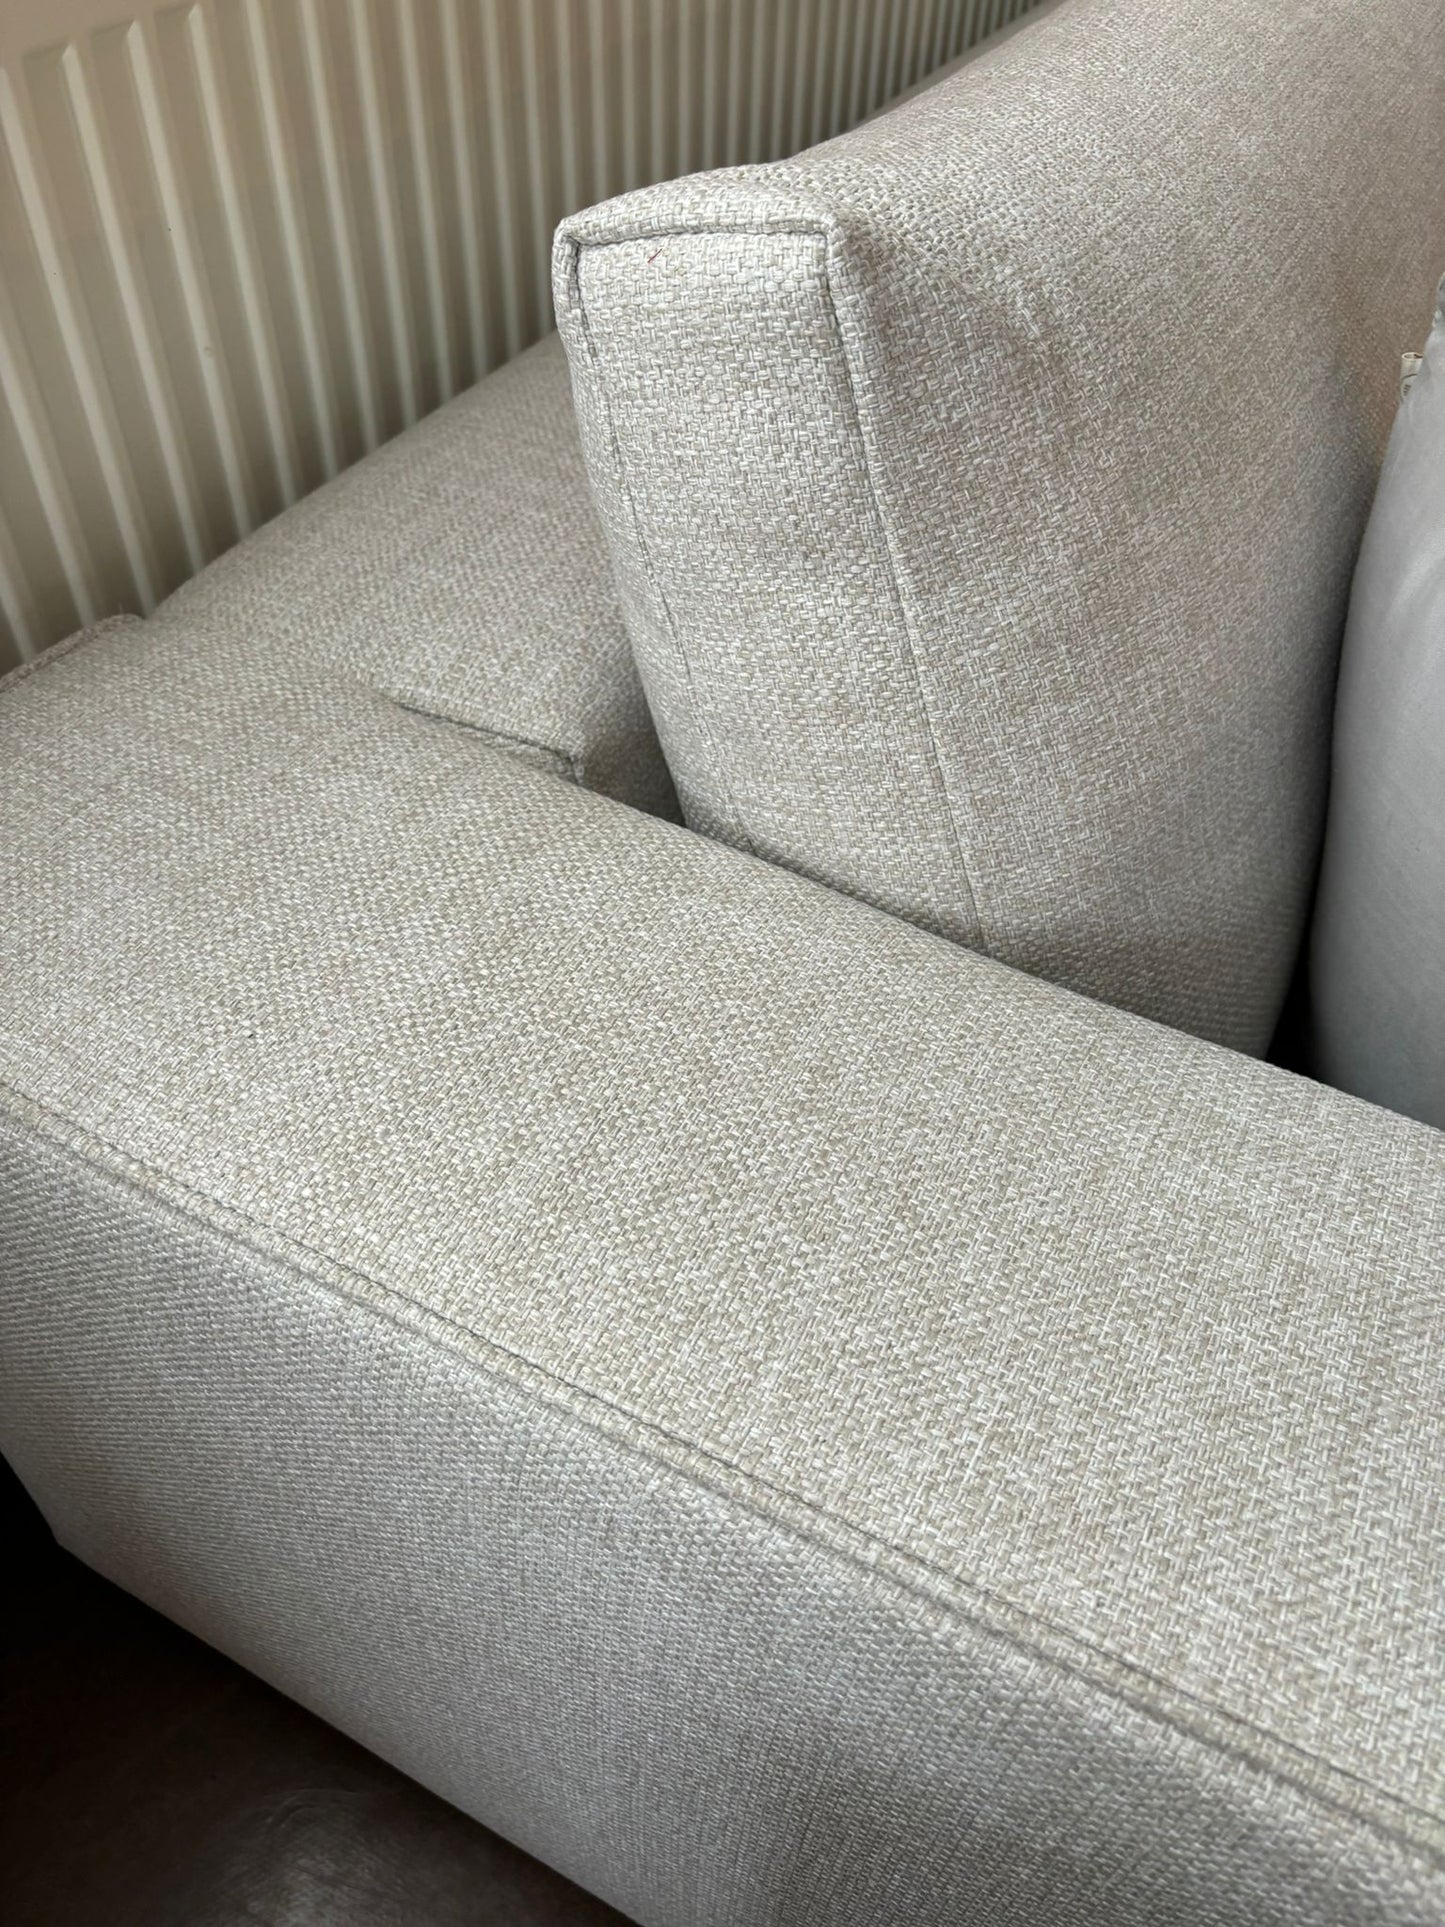 Minotti Hamilton sofa 104x210cm fabric Pitti “Elephant” Loam